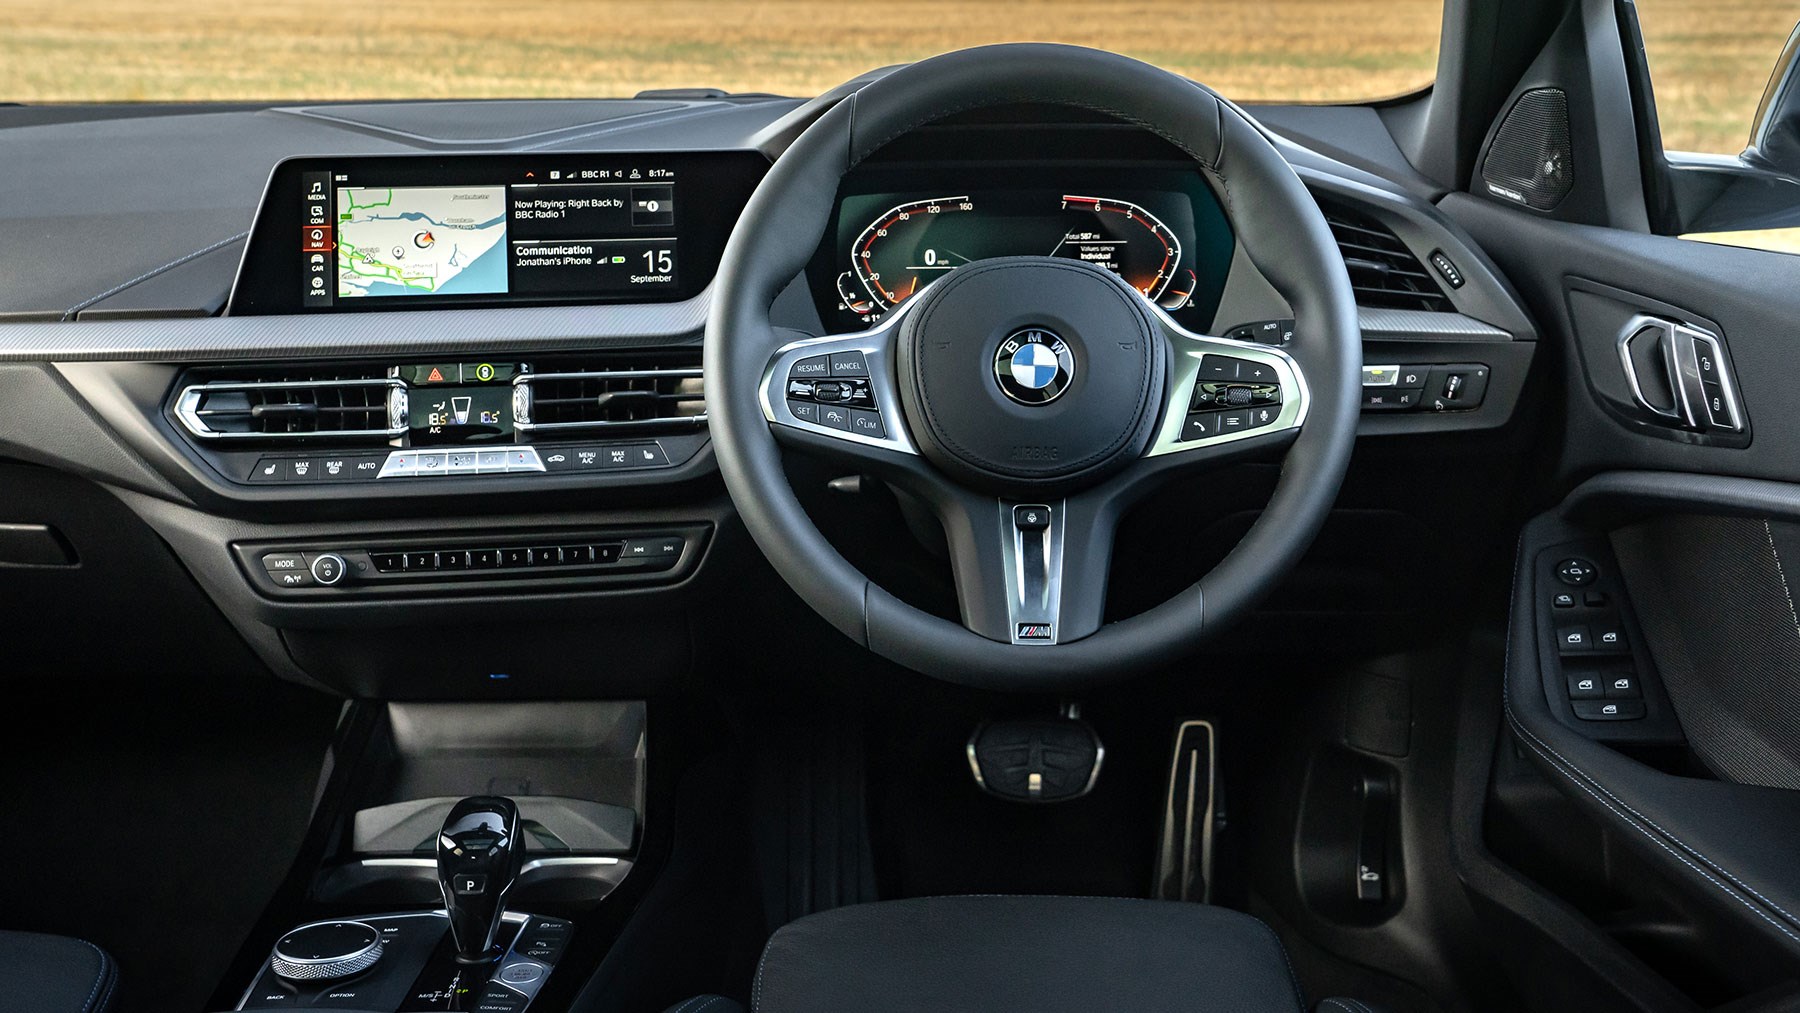 BMW 1-series interior: right-hand drive cabin